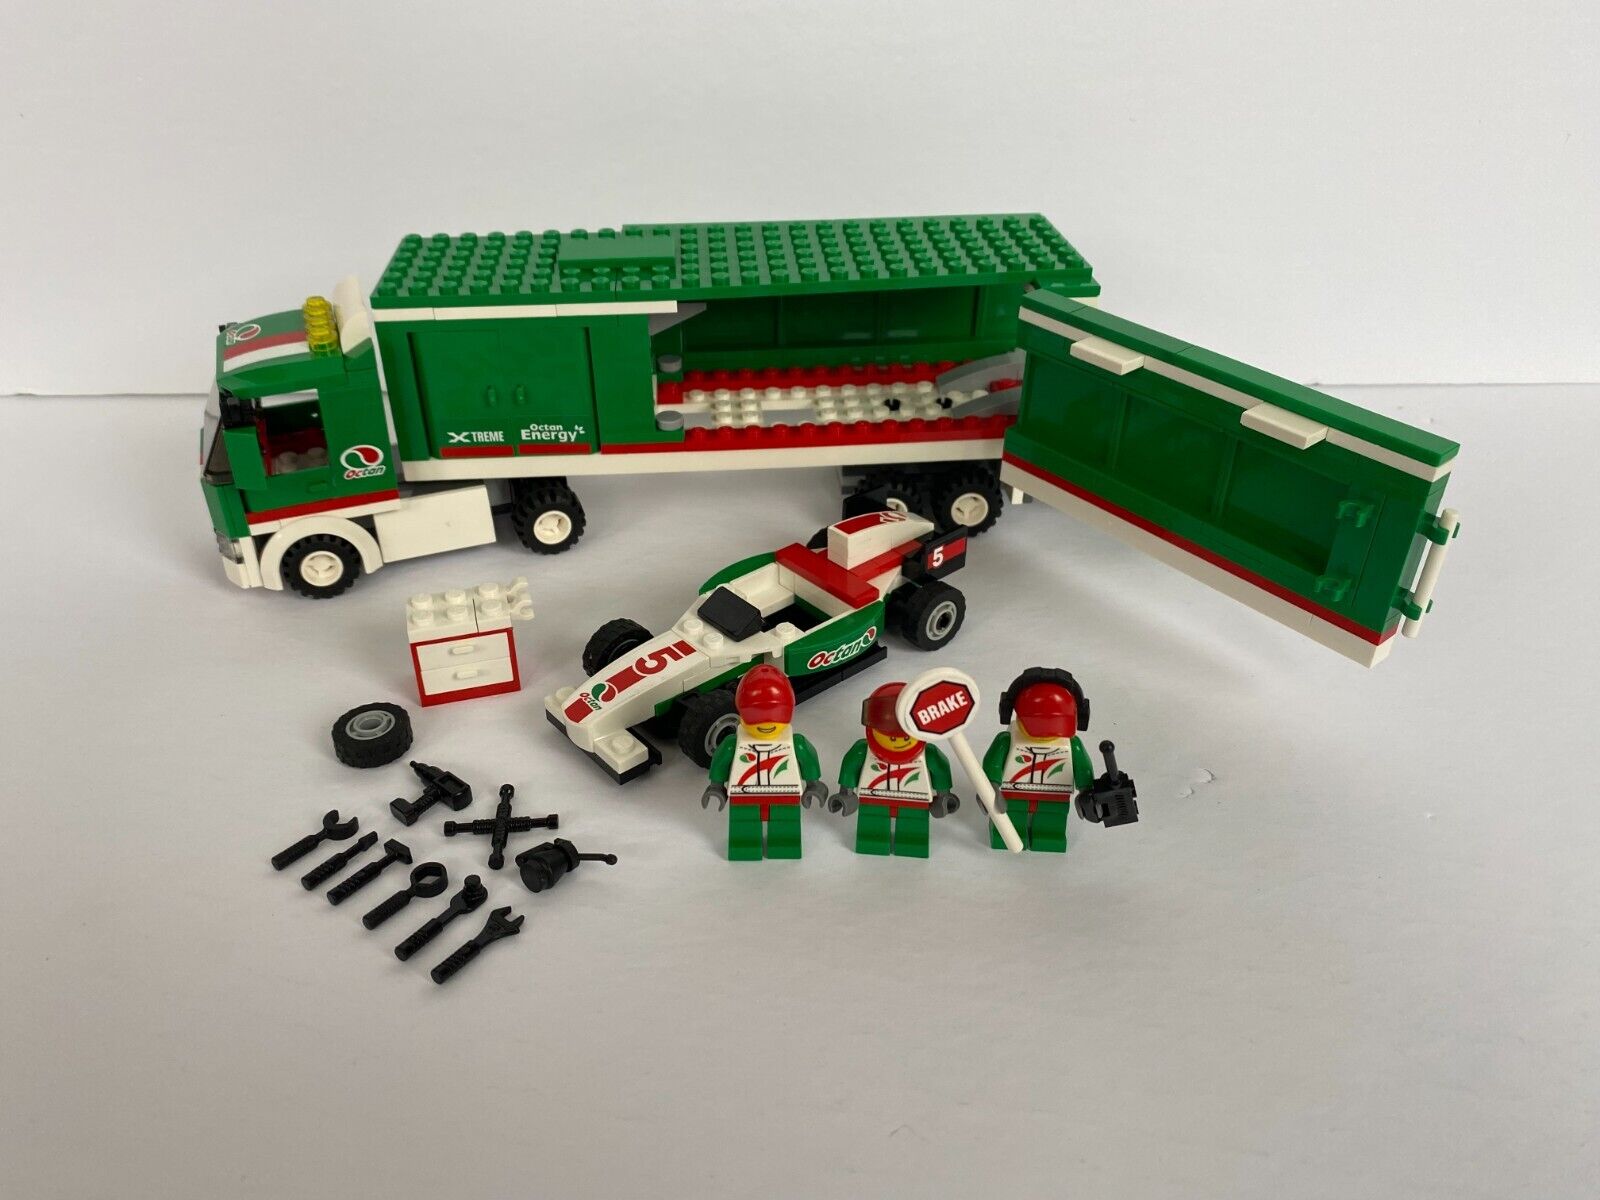 Lego set 60025 Grand Prix Track - 315 Pieces - 3 Minifigs - City